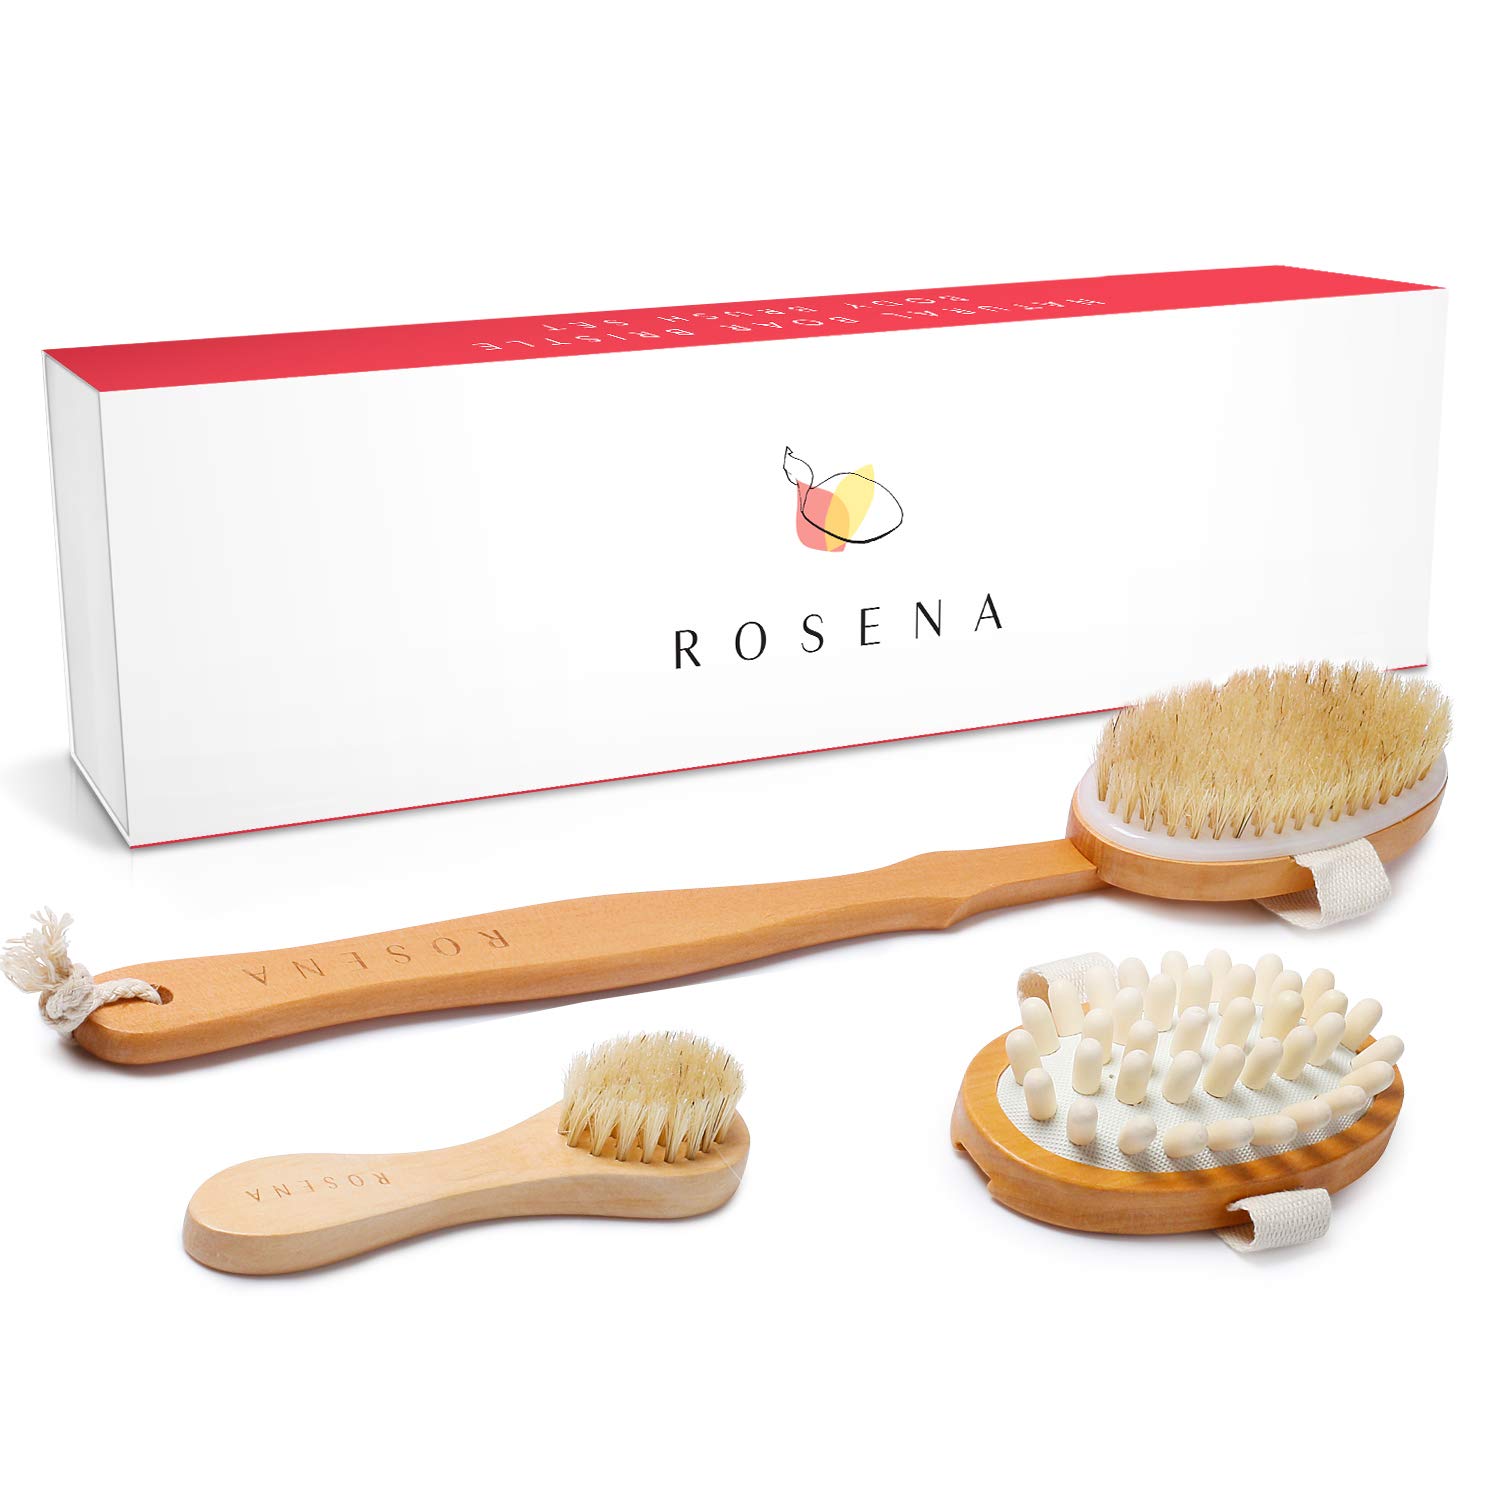 Dry Brushing Body Brush Set – Natural Bristle Spa Exfoliator Kit with Face Cleansing Brush, Long Dry Brushing Body Brush for Lymphatic Drainage & Massaging Cellulite Brush for Smooth, Radiant Skin